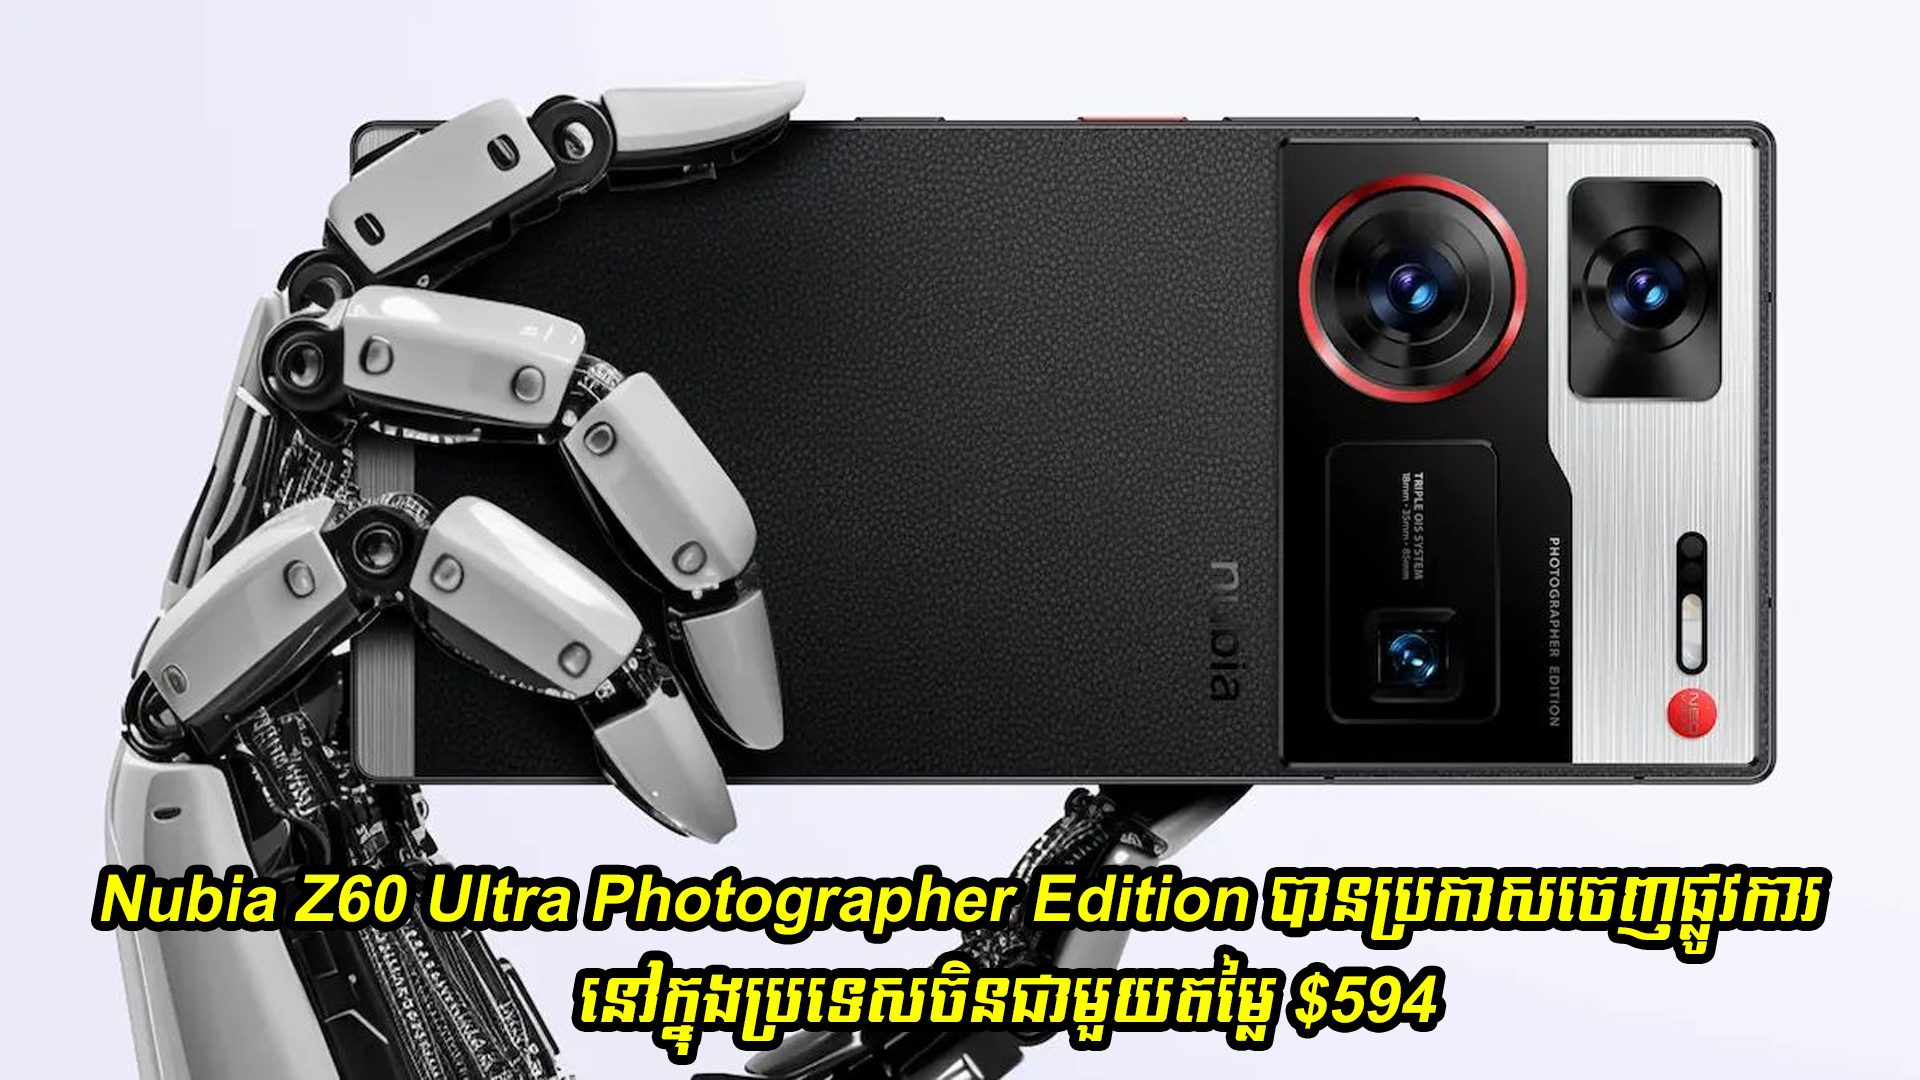 Nubia Z60 Ultra Photographer Edition បានប្រកាសចេញផ្លូវការណ៍នៅក្នុងប្រទេសចិន